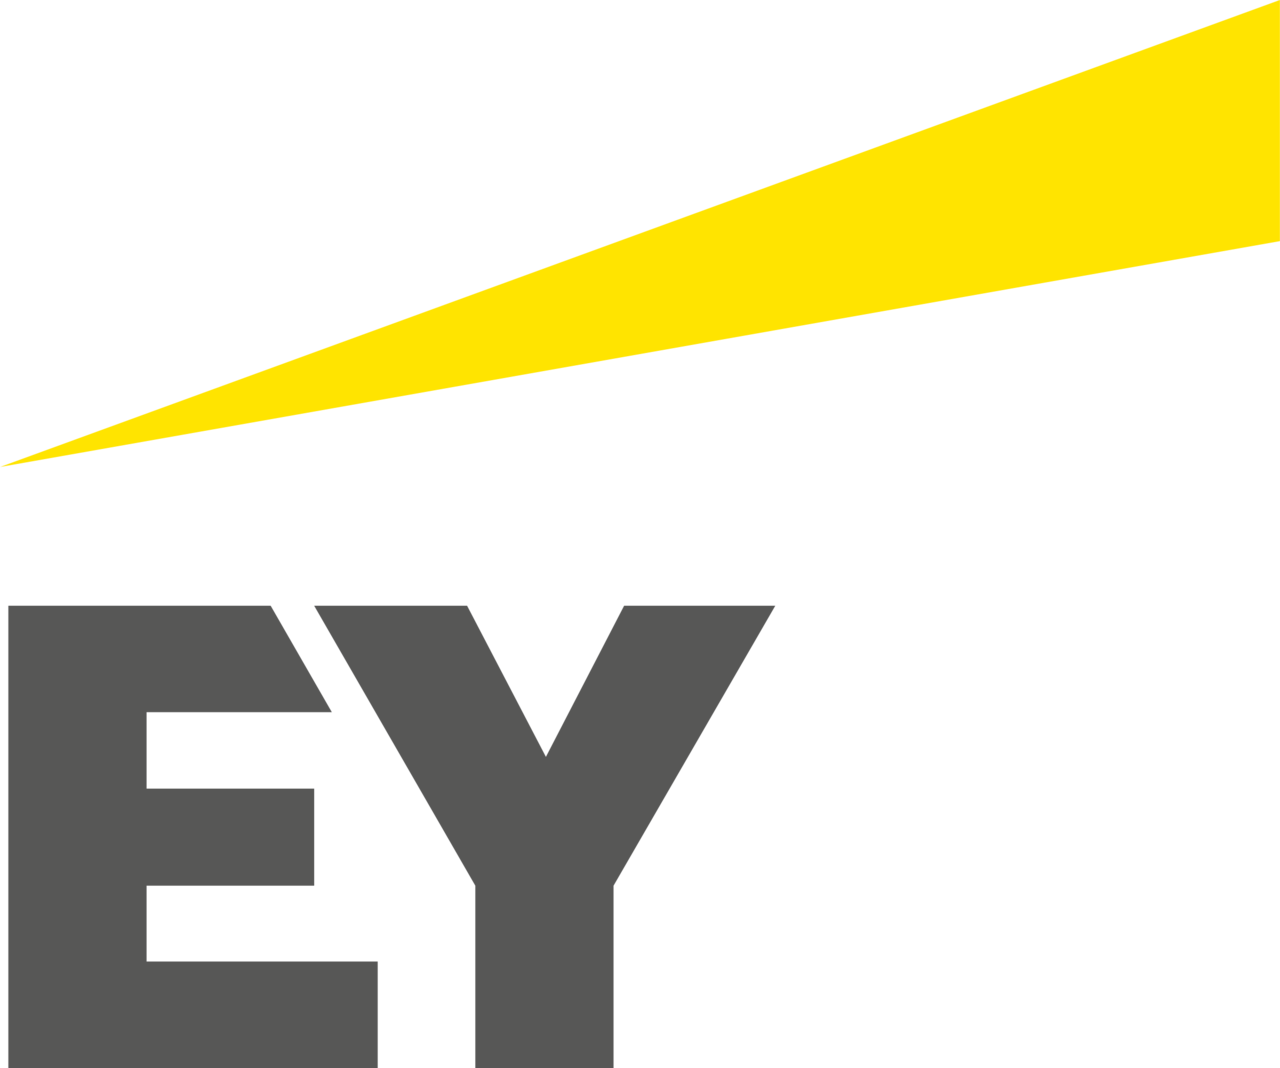 ernst-young-ey-logo